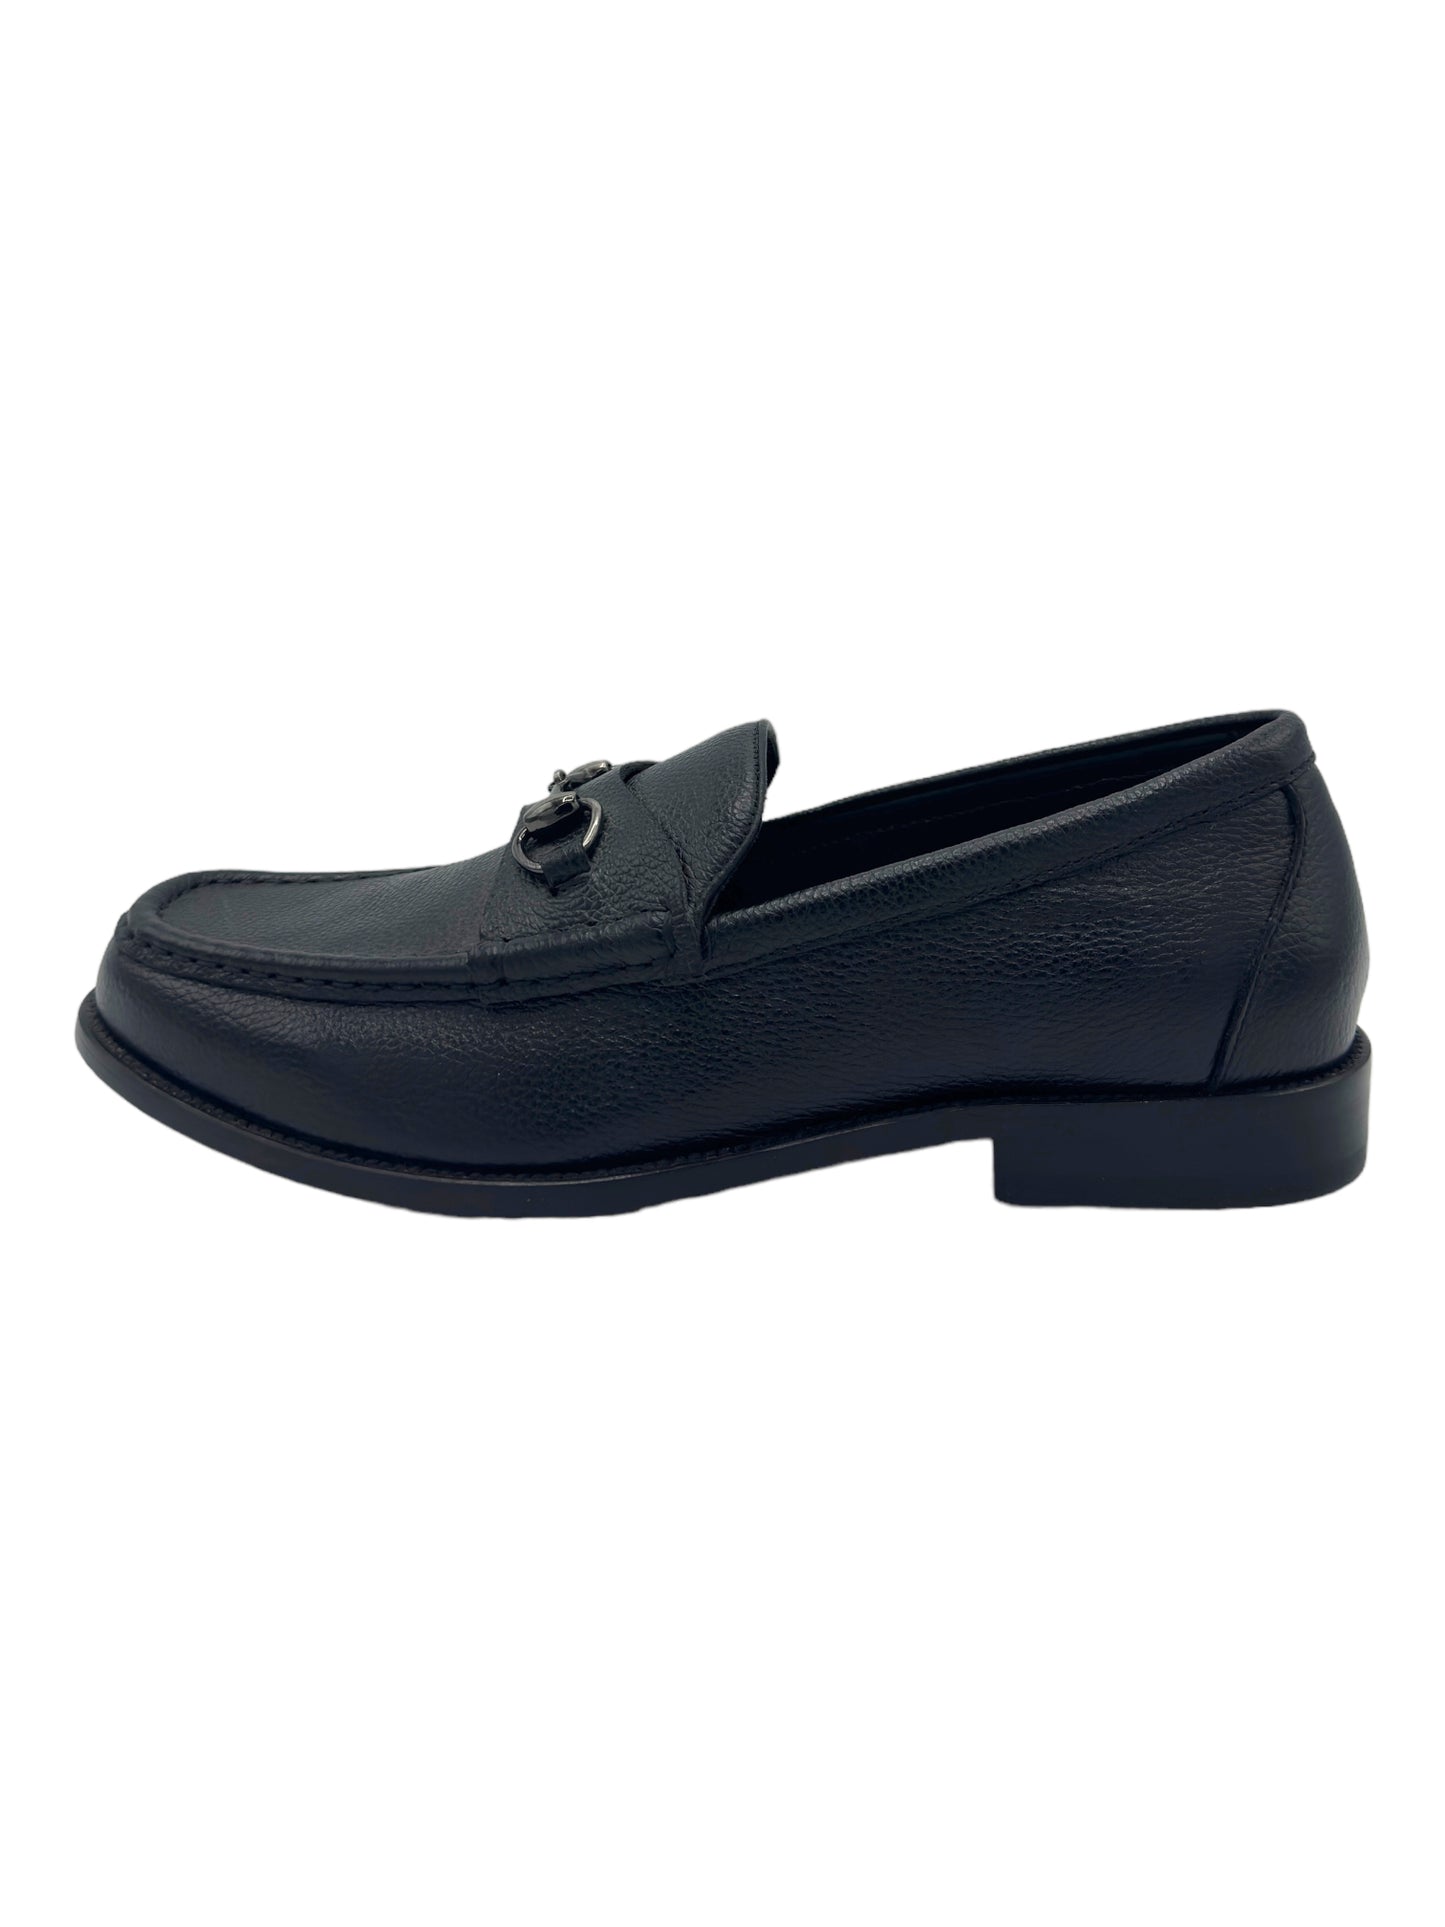 Gucci Black Horsebit Pebble Leather Loafers